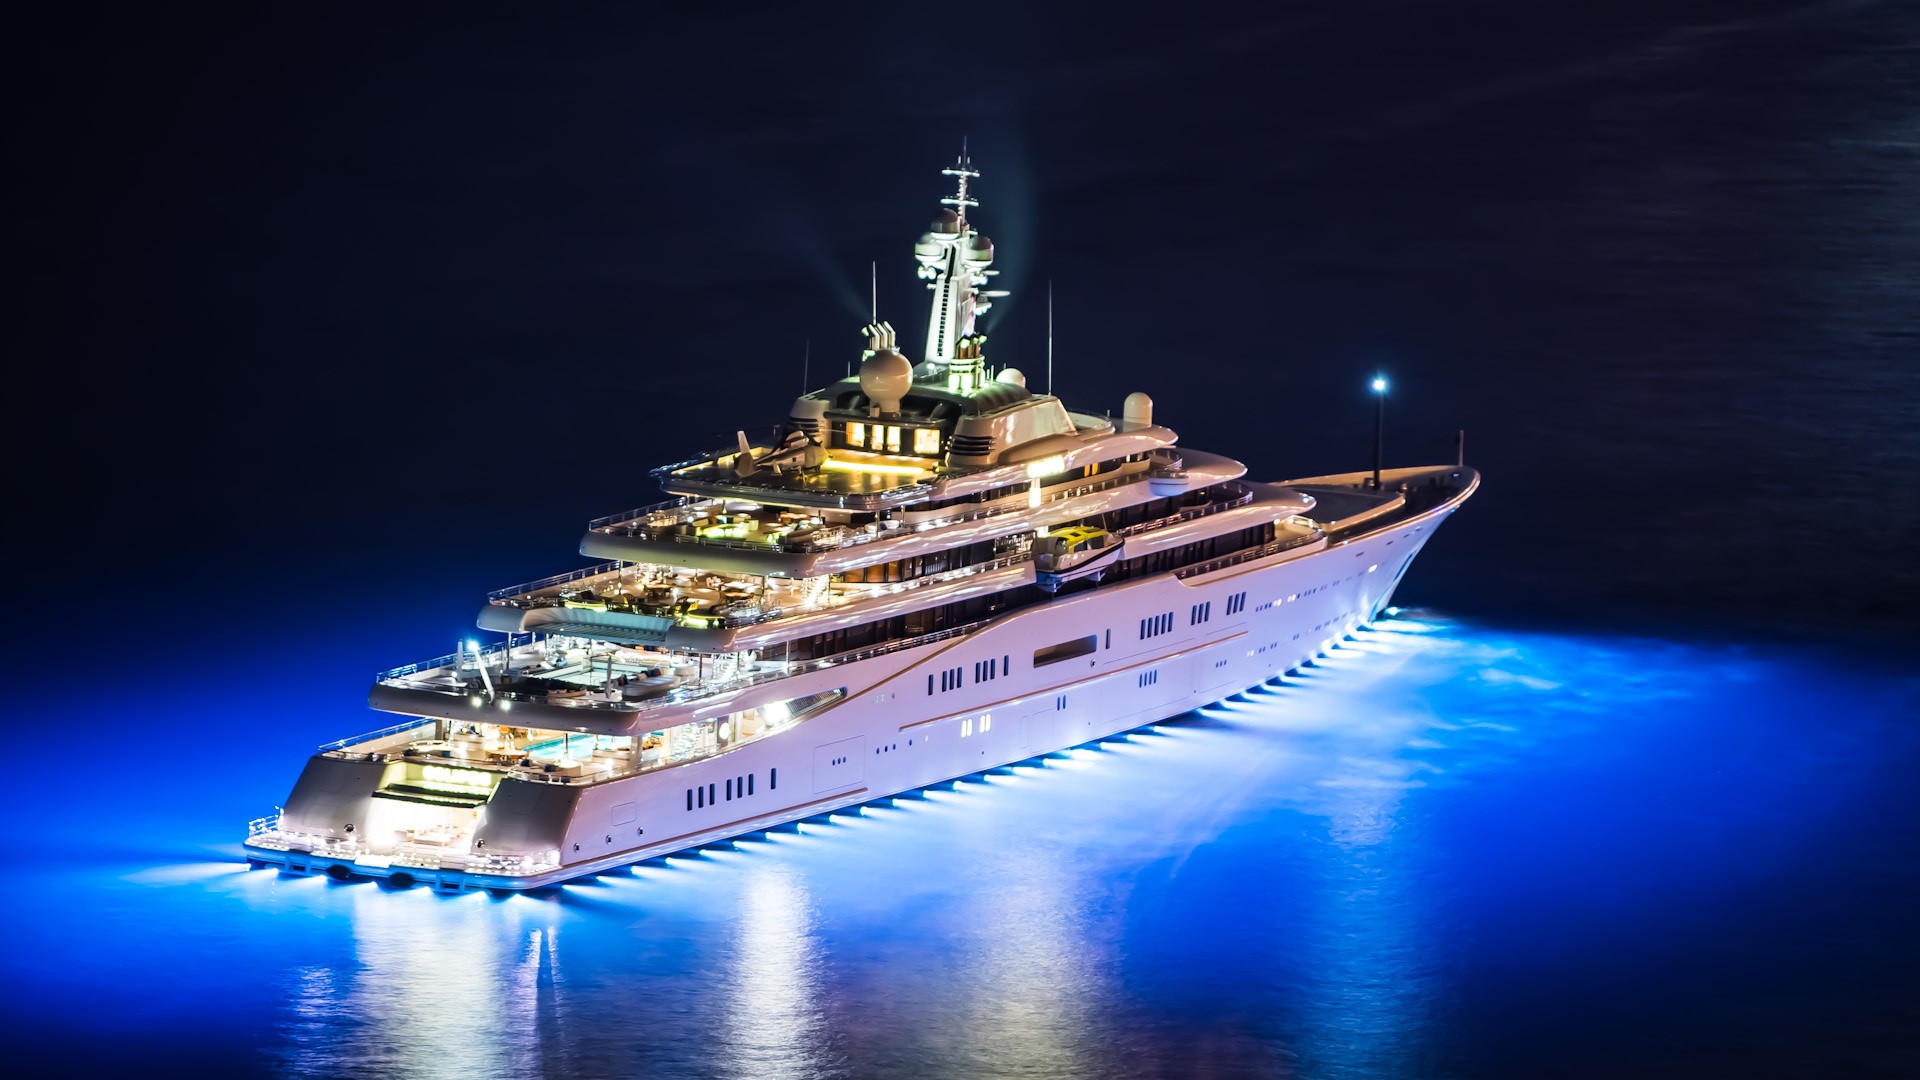 General 1920x1080 ship water sea yacht night lights reflection luxury vehicle